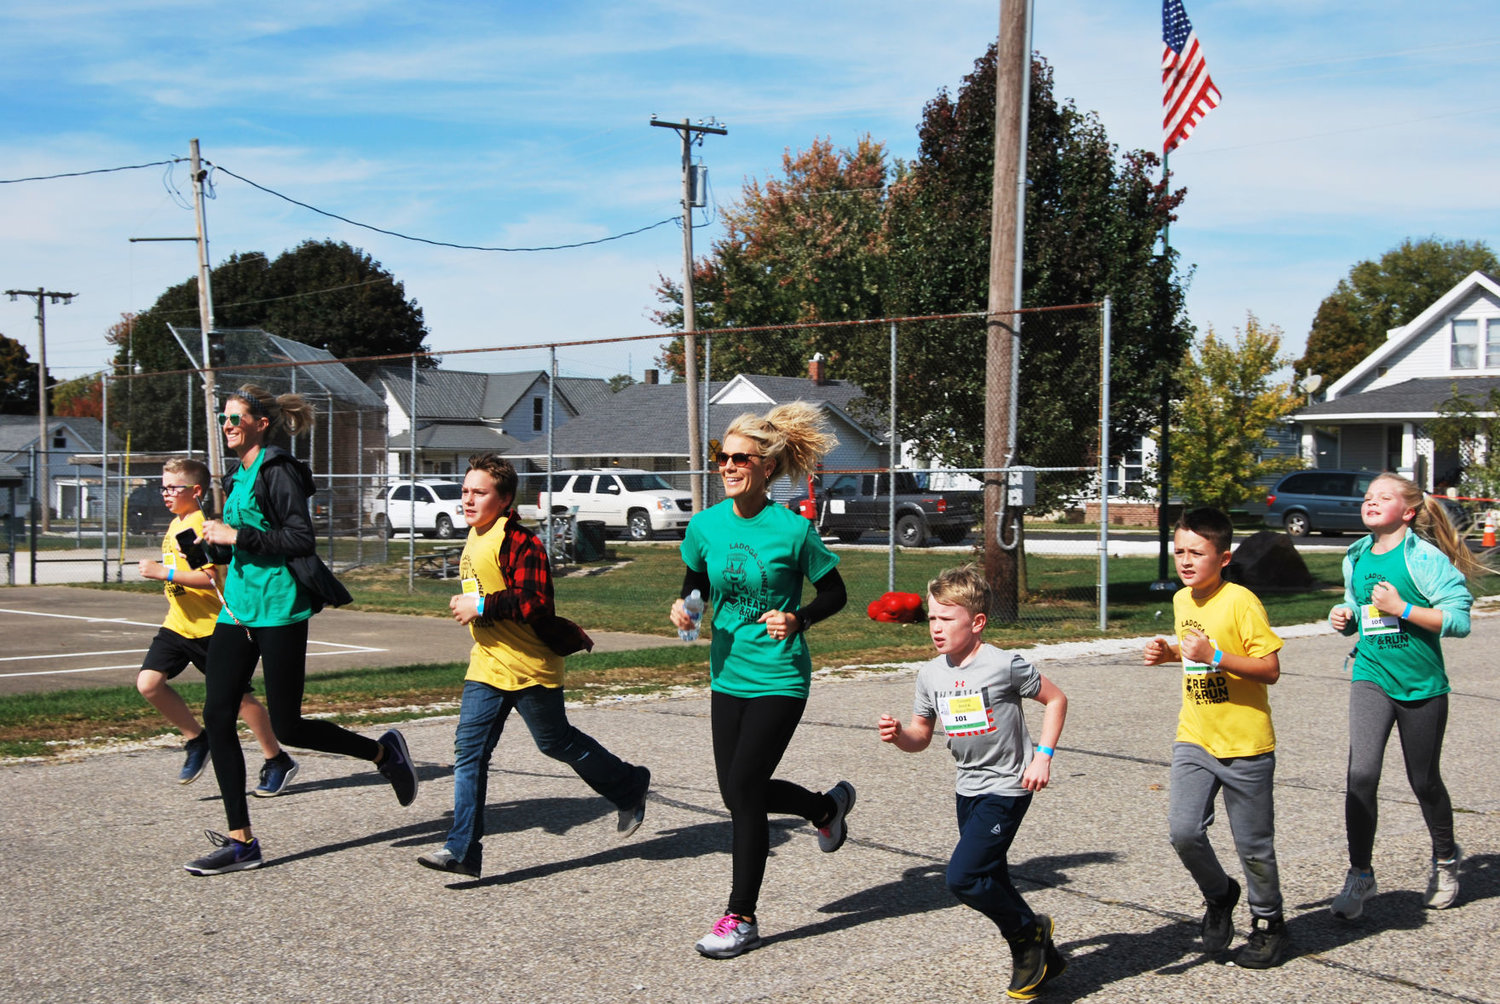 Teachers, Kylene Gott (on the left) and Tammy McGaughey (on the right) run along side with their students